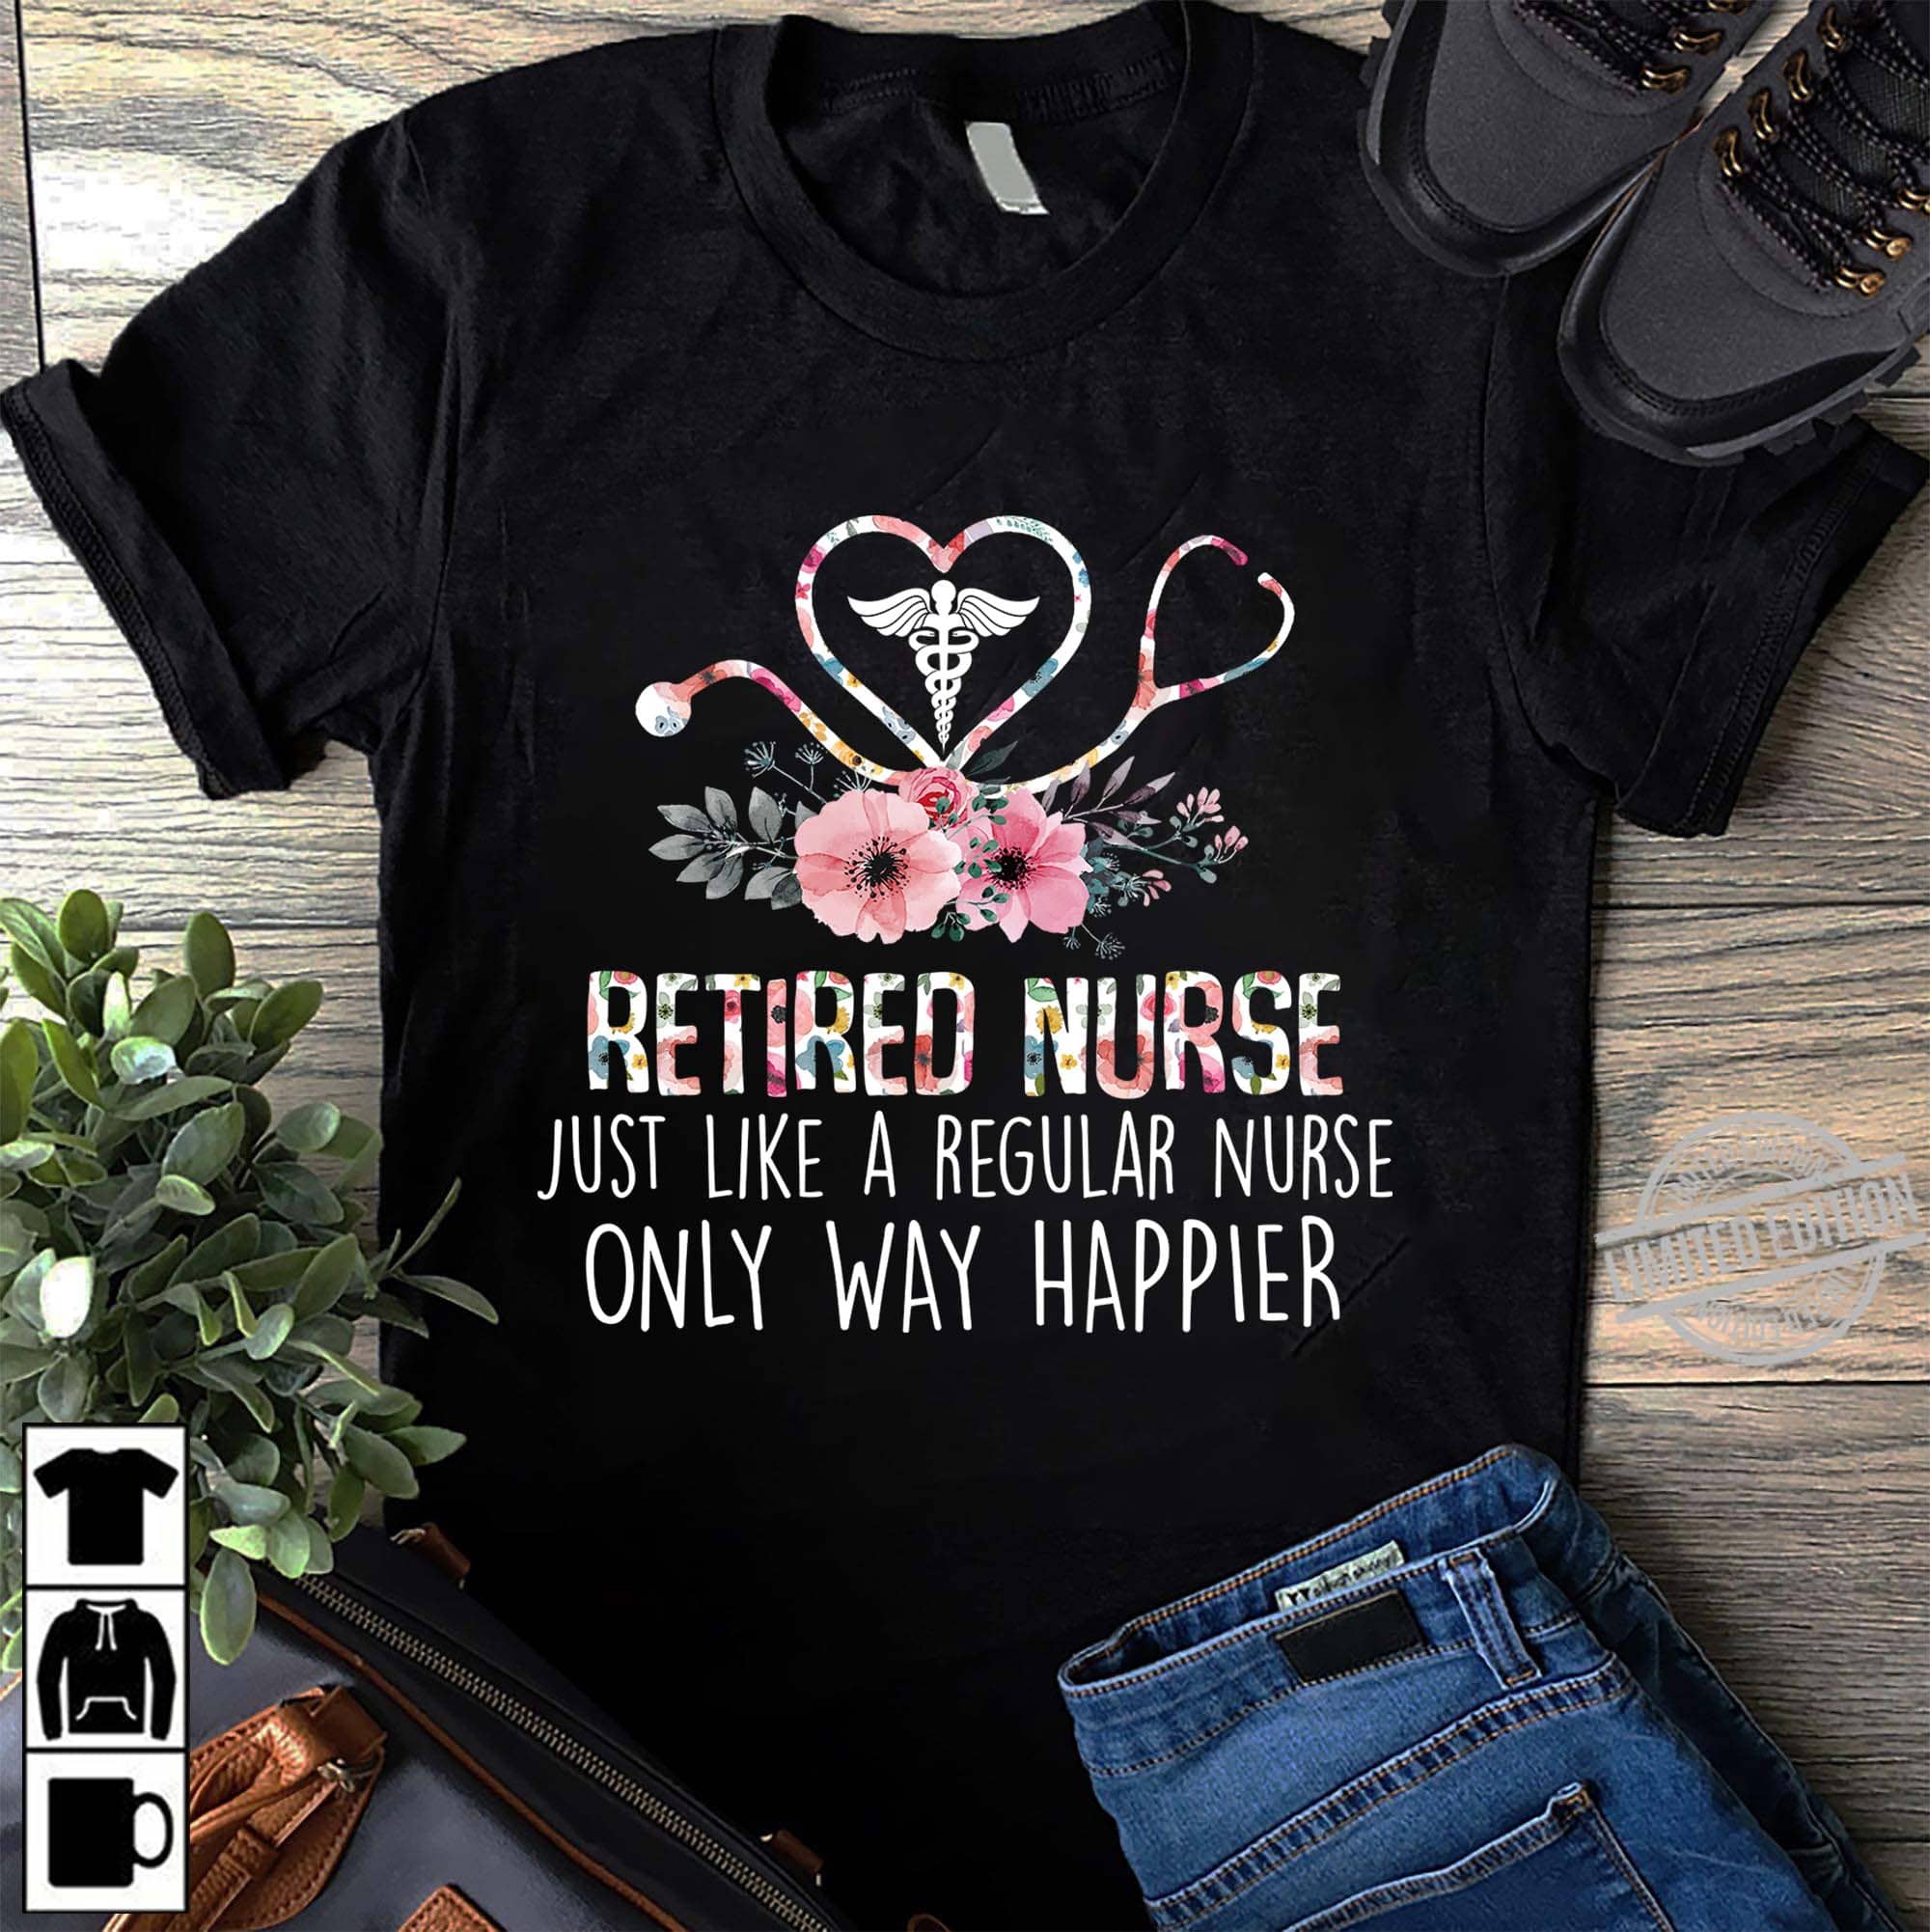 CNA Symbol - Retired nurse just like a regular nurse only way happier